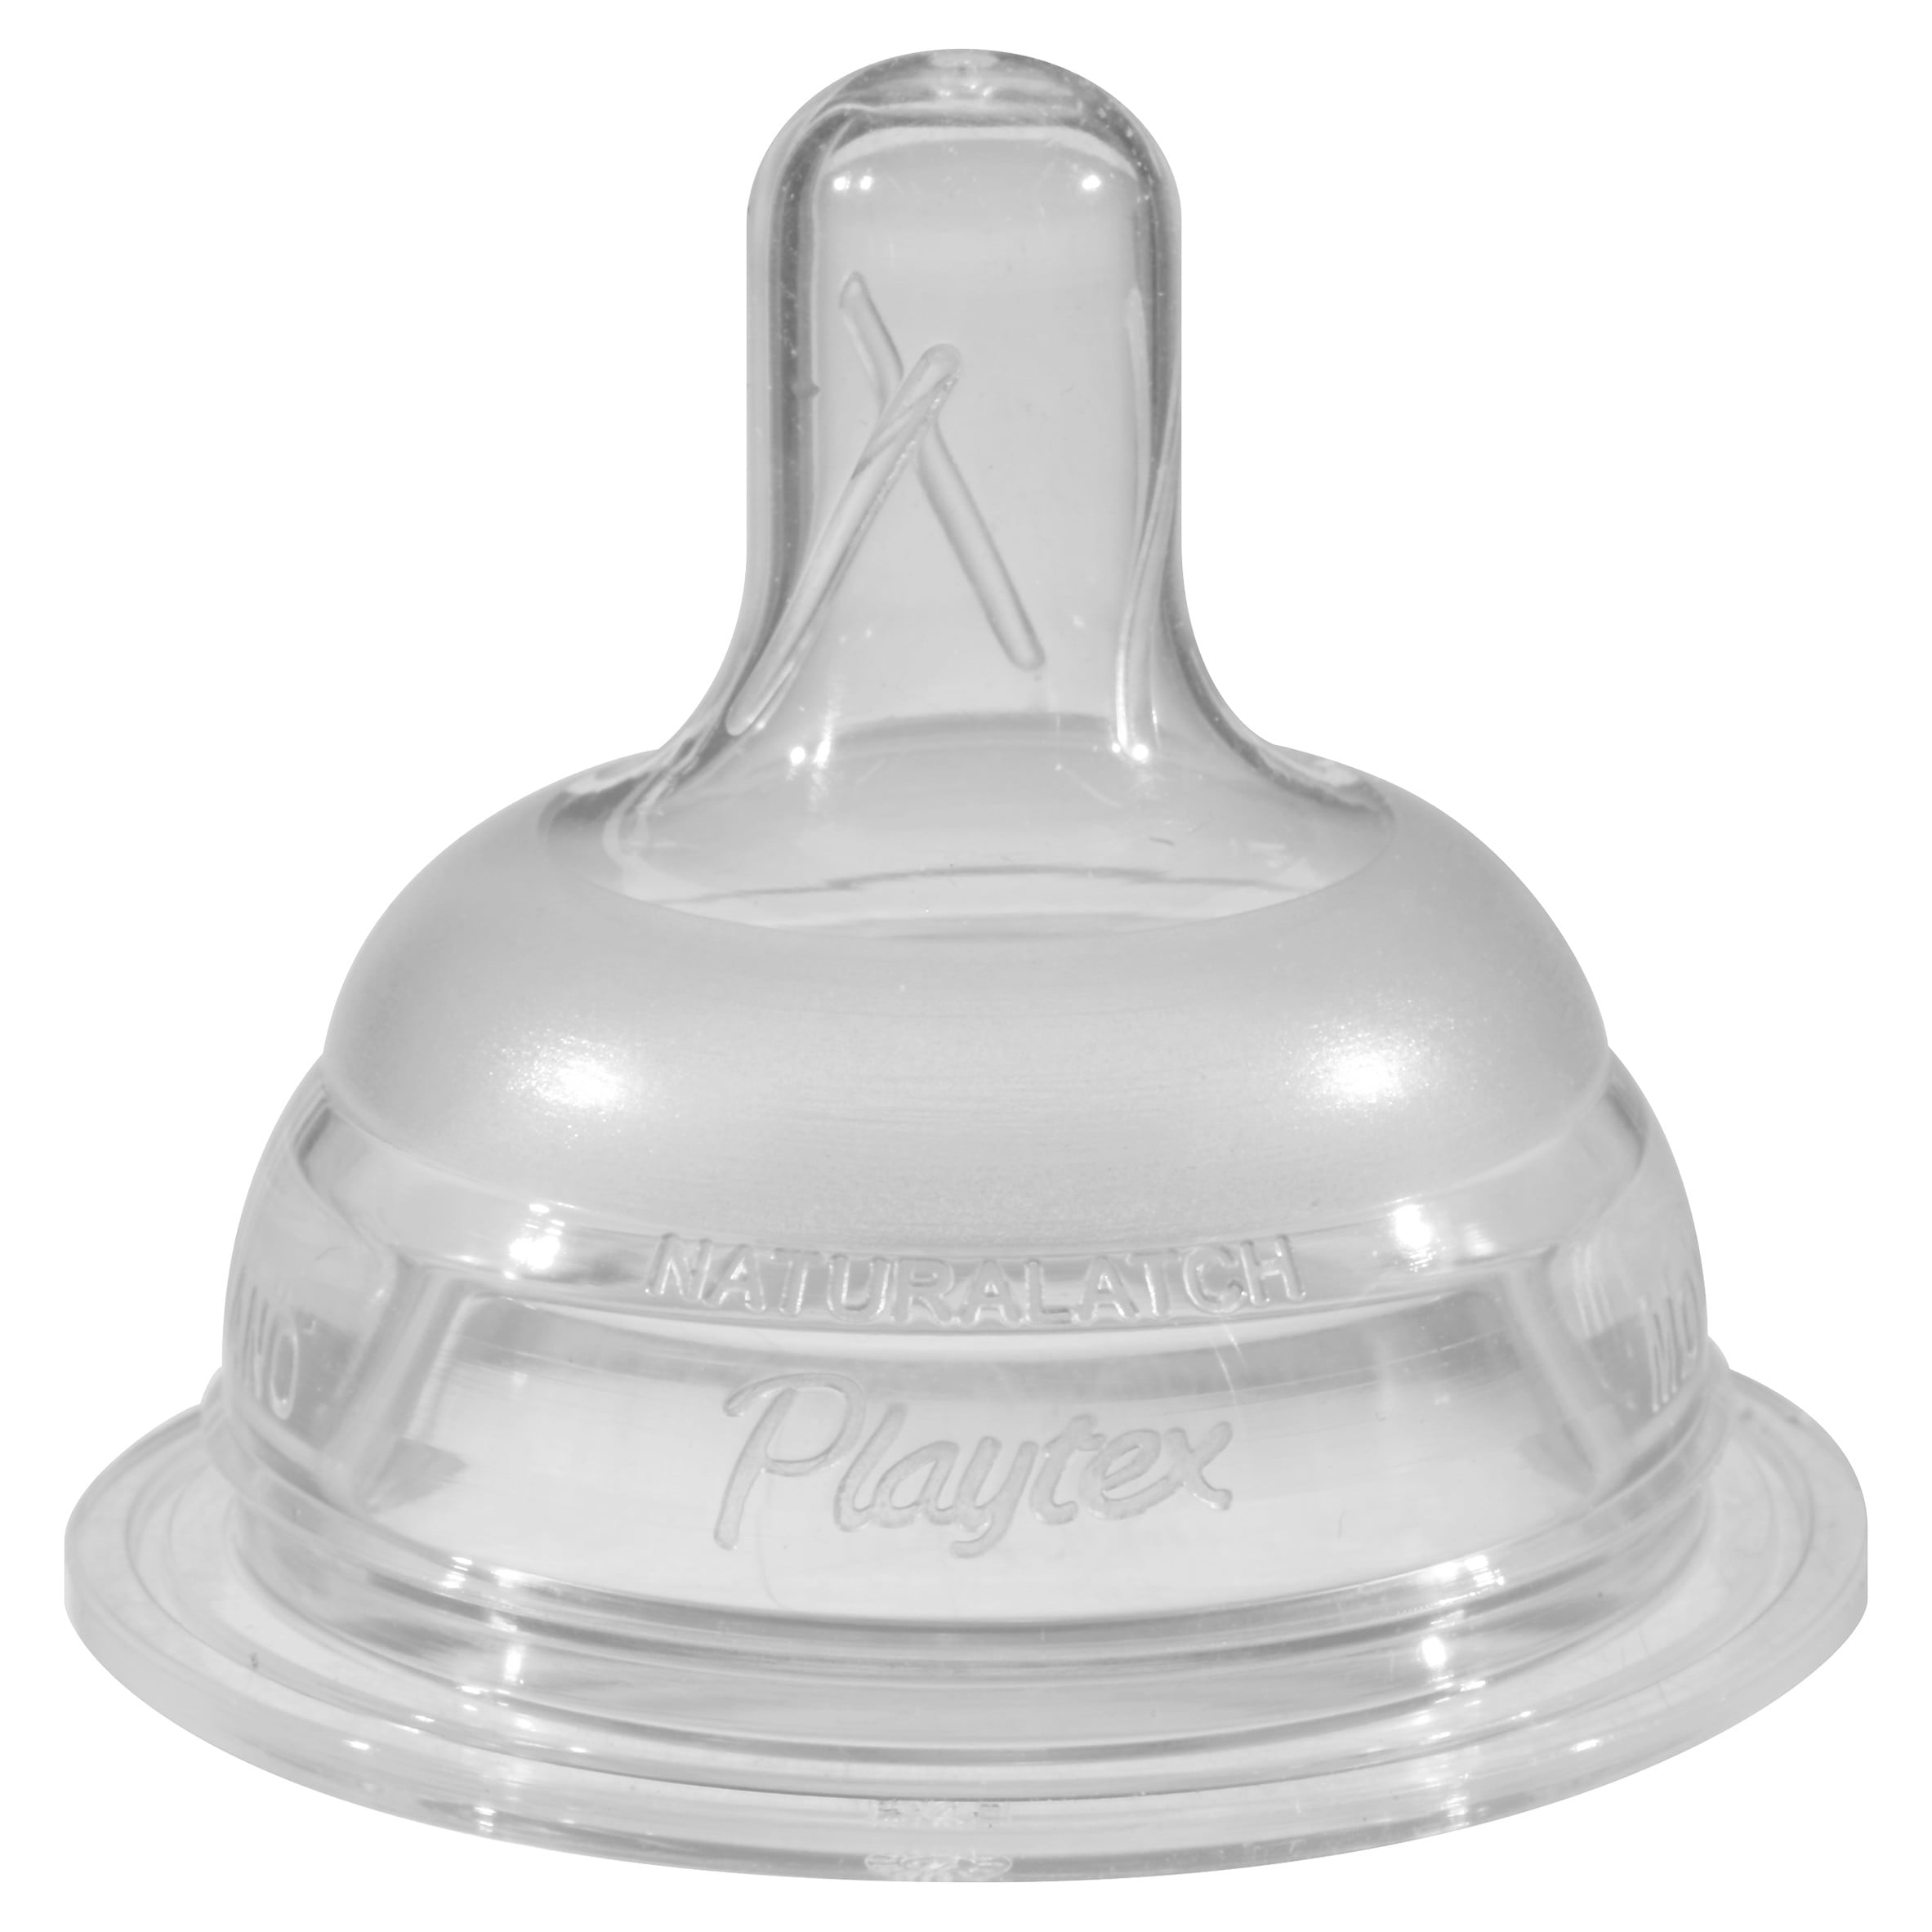 Playtex Drop Ins System Original Nurser Baby Bottle 4 oz Slow Flow Latex COLORS 